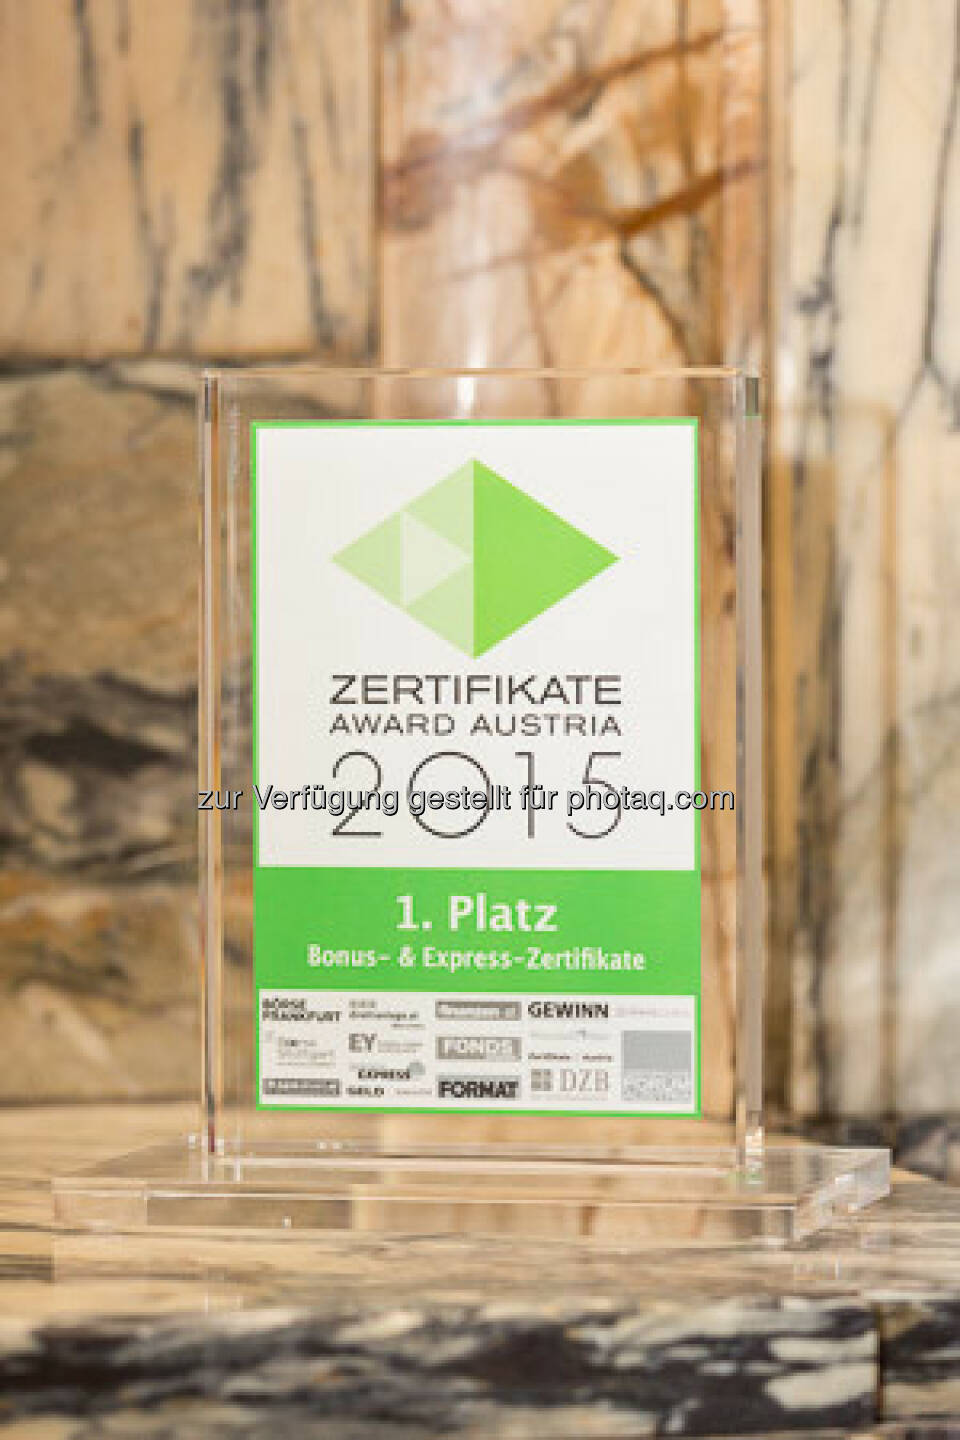 Zertifikate Award 2015 - Trophäe Bonus & Express-Zertifikate